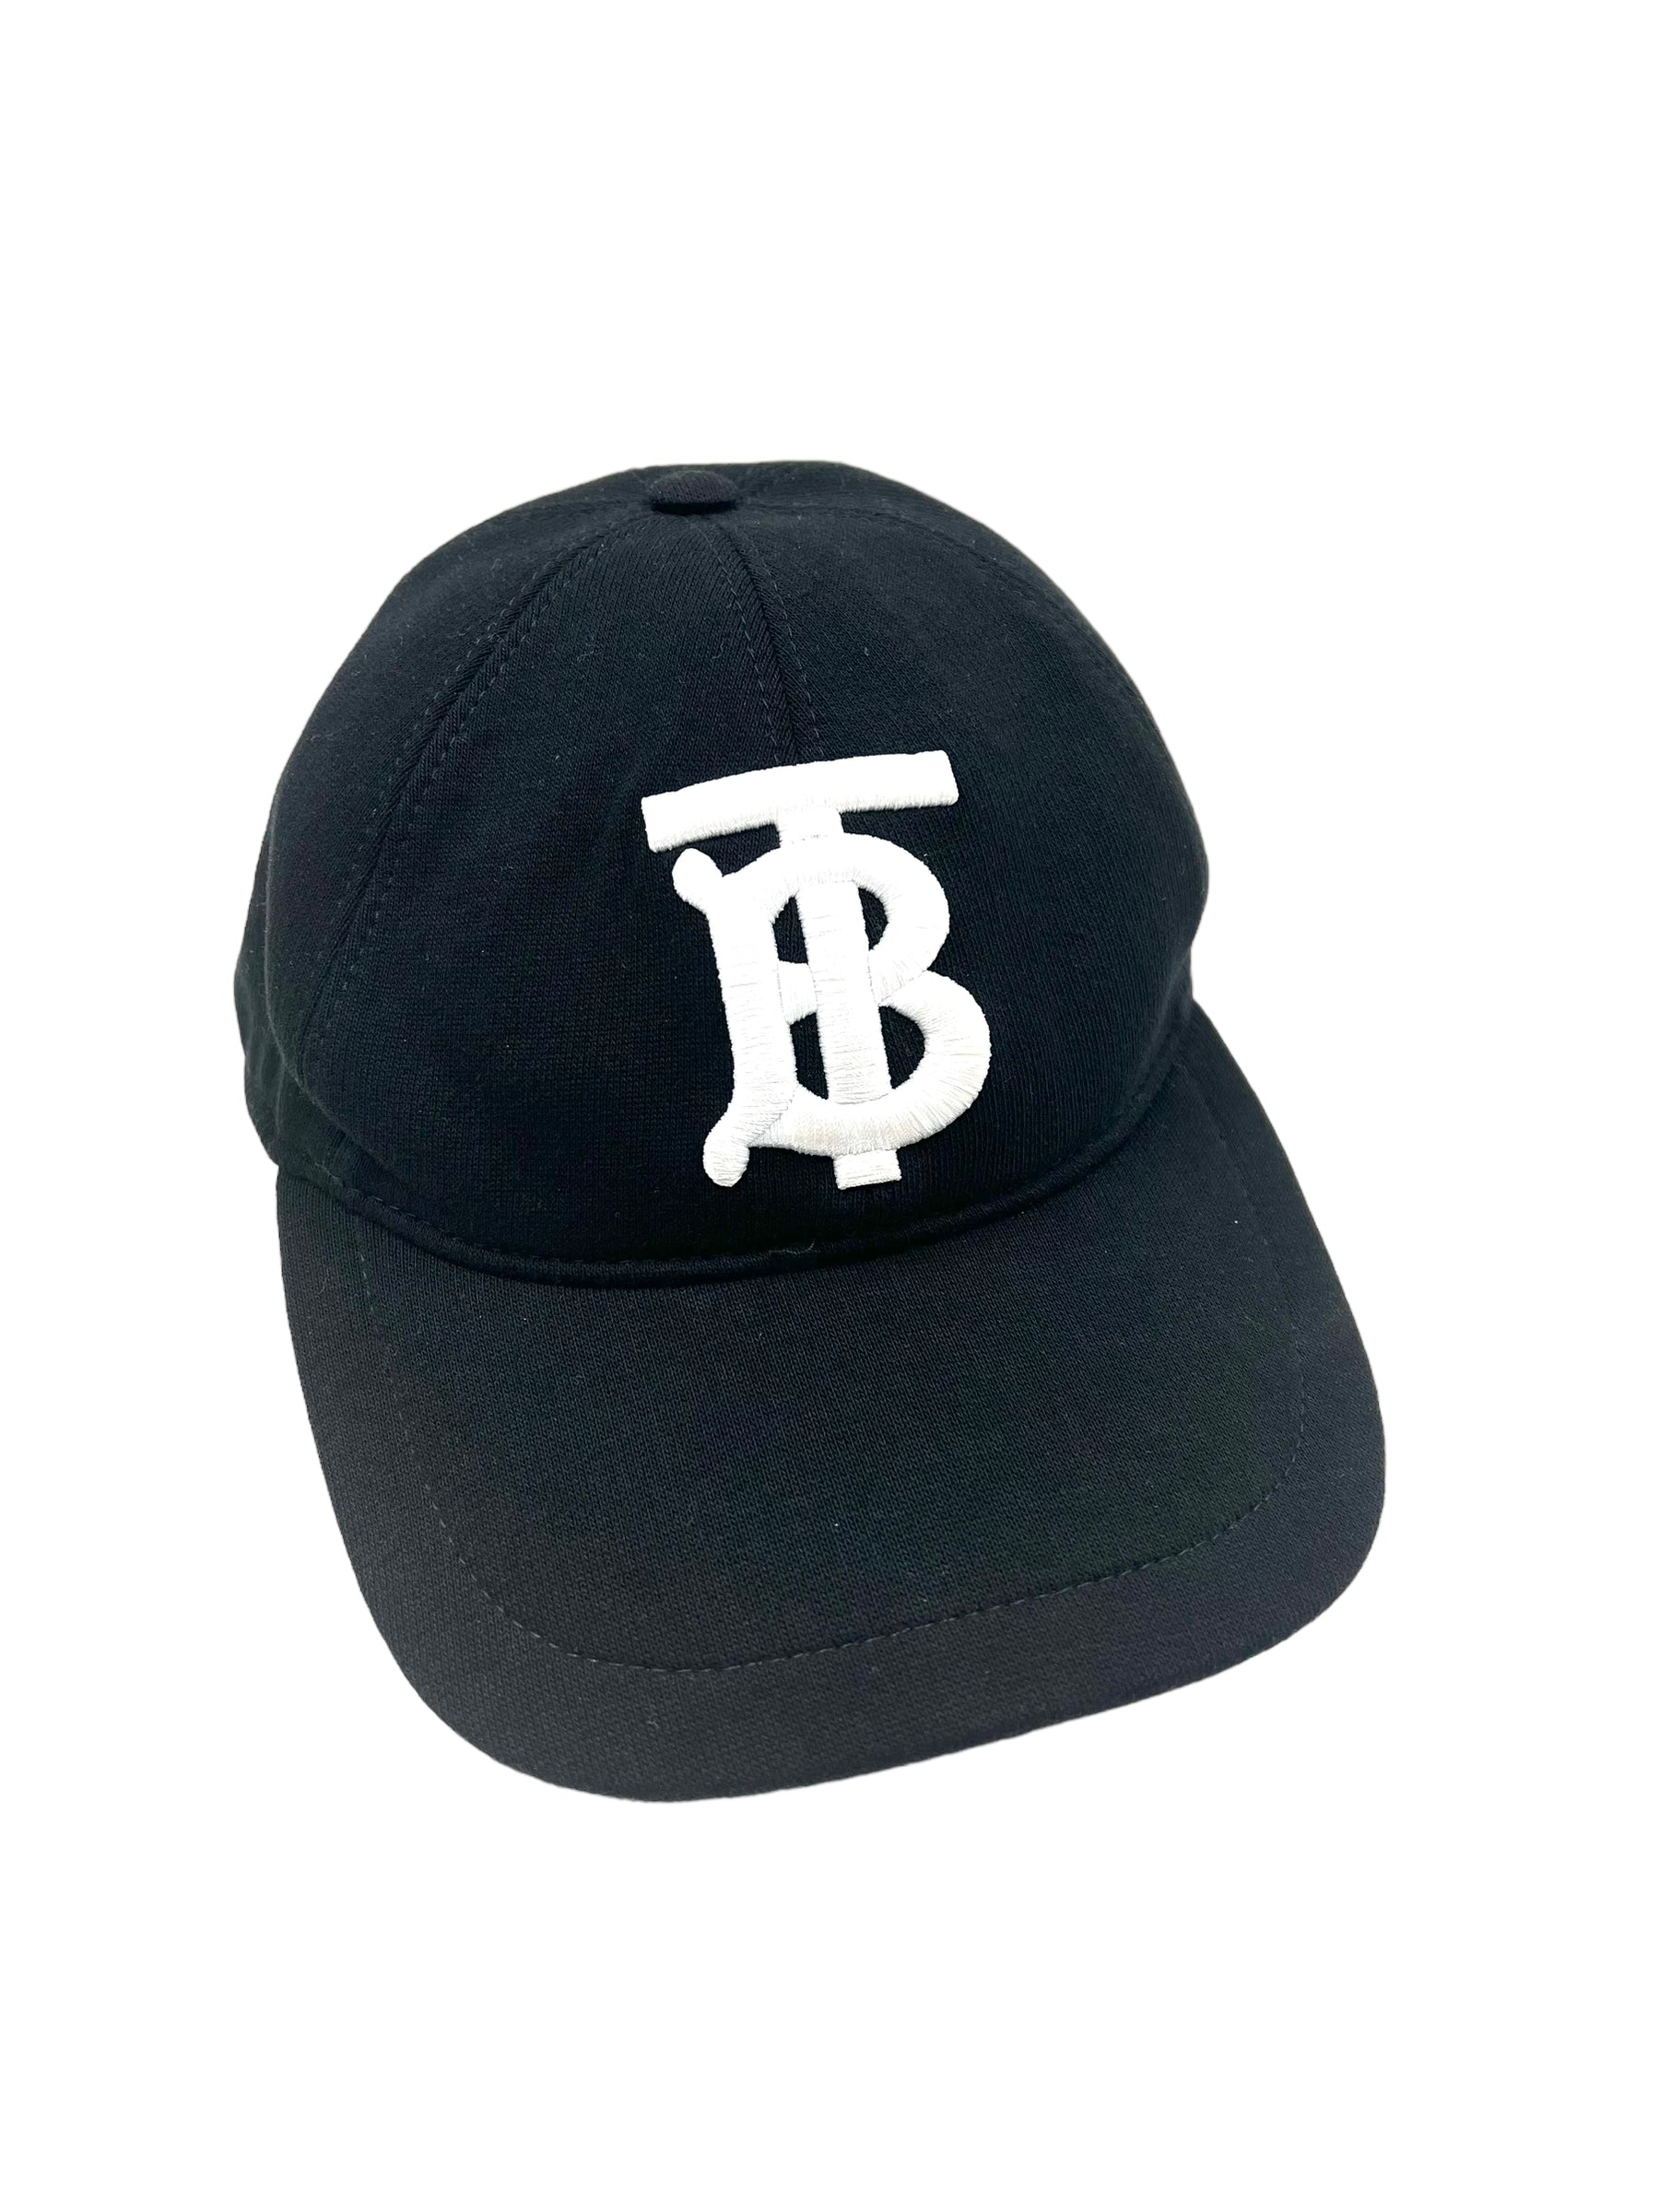 Burberry TB Monogram Baseball Cap Black/White/Orange